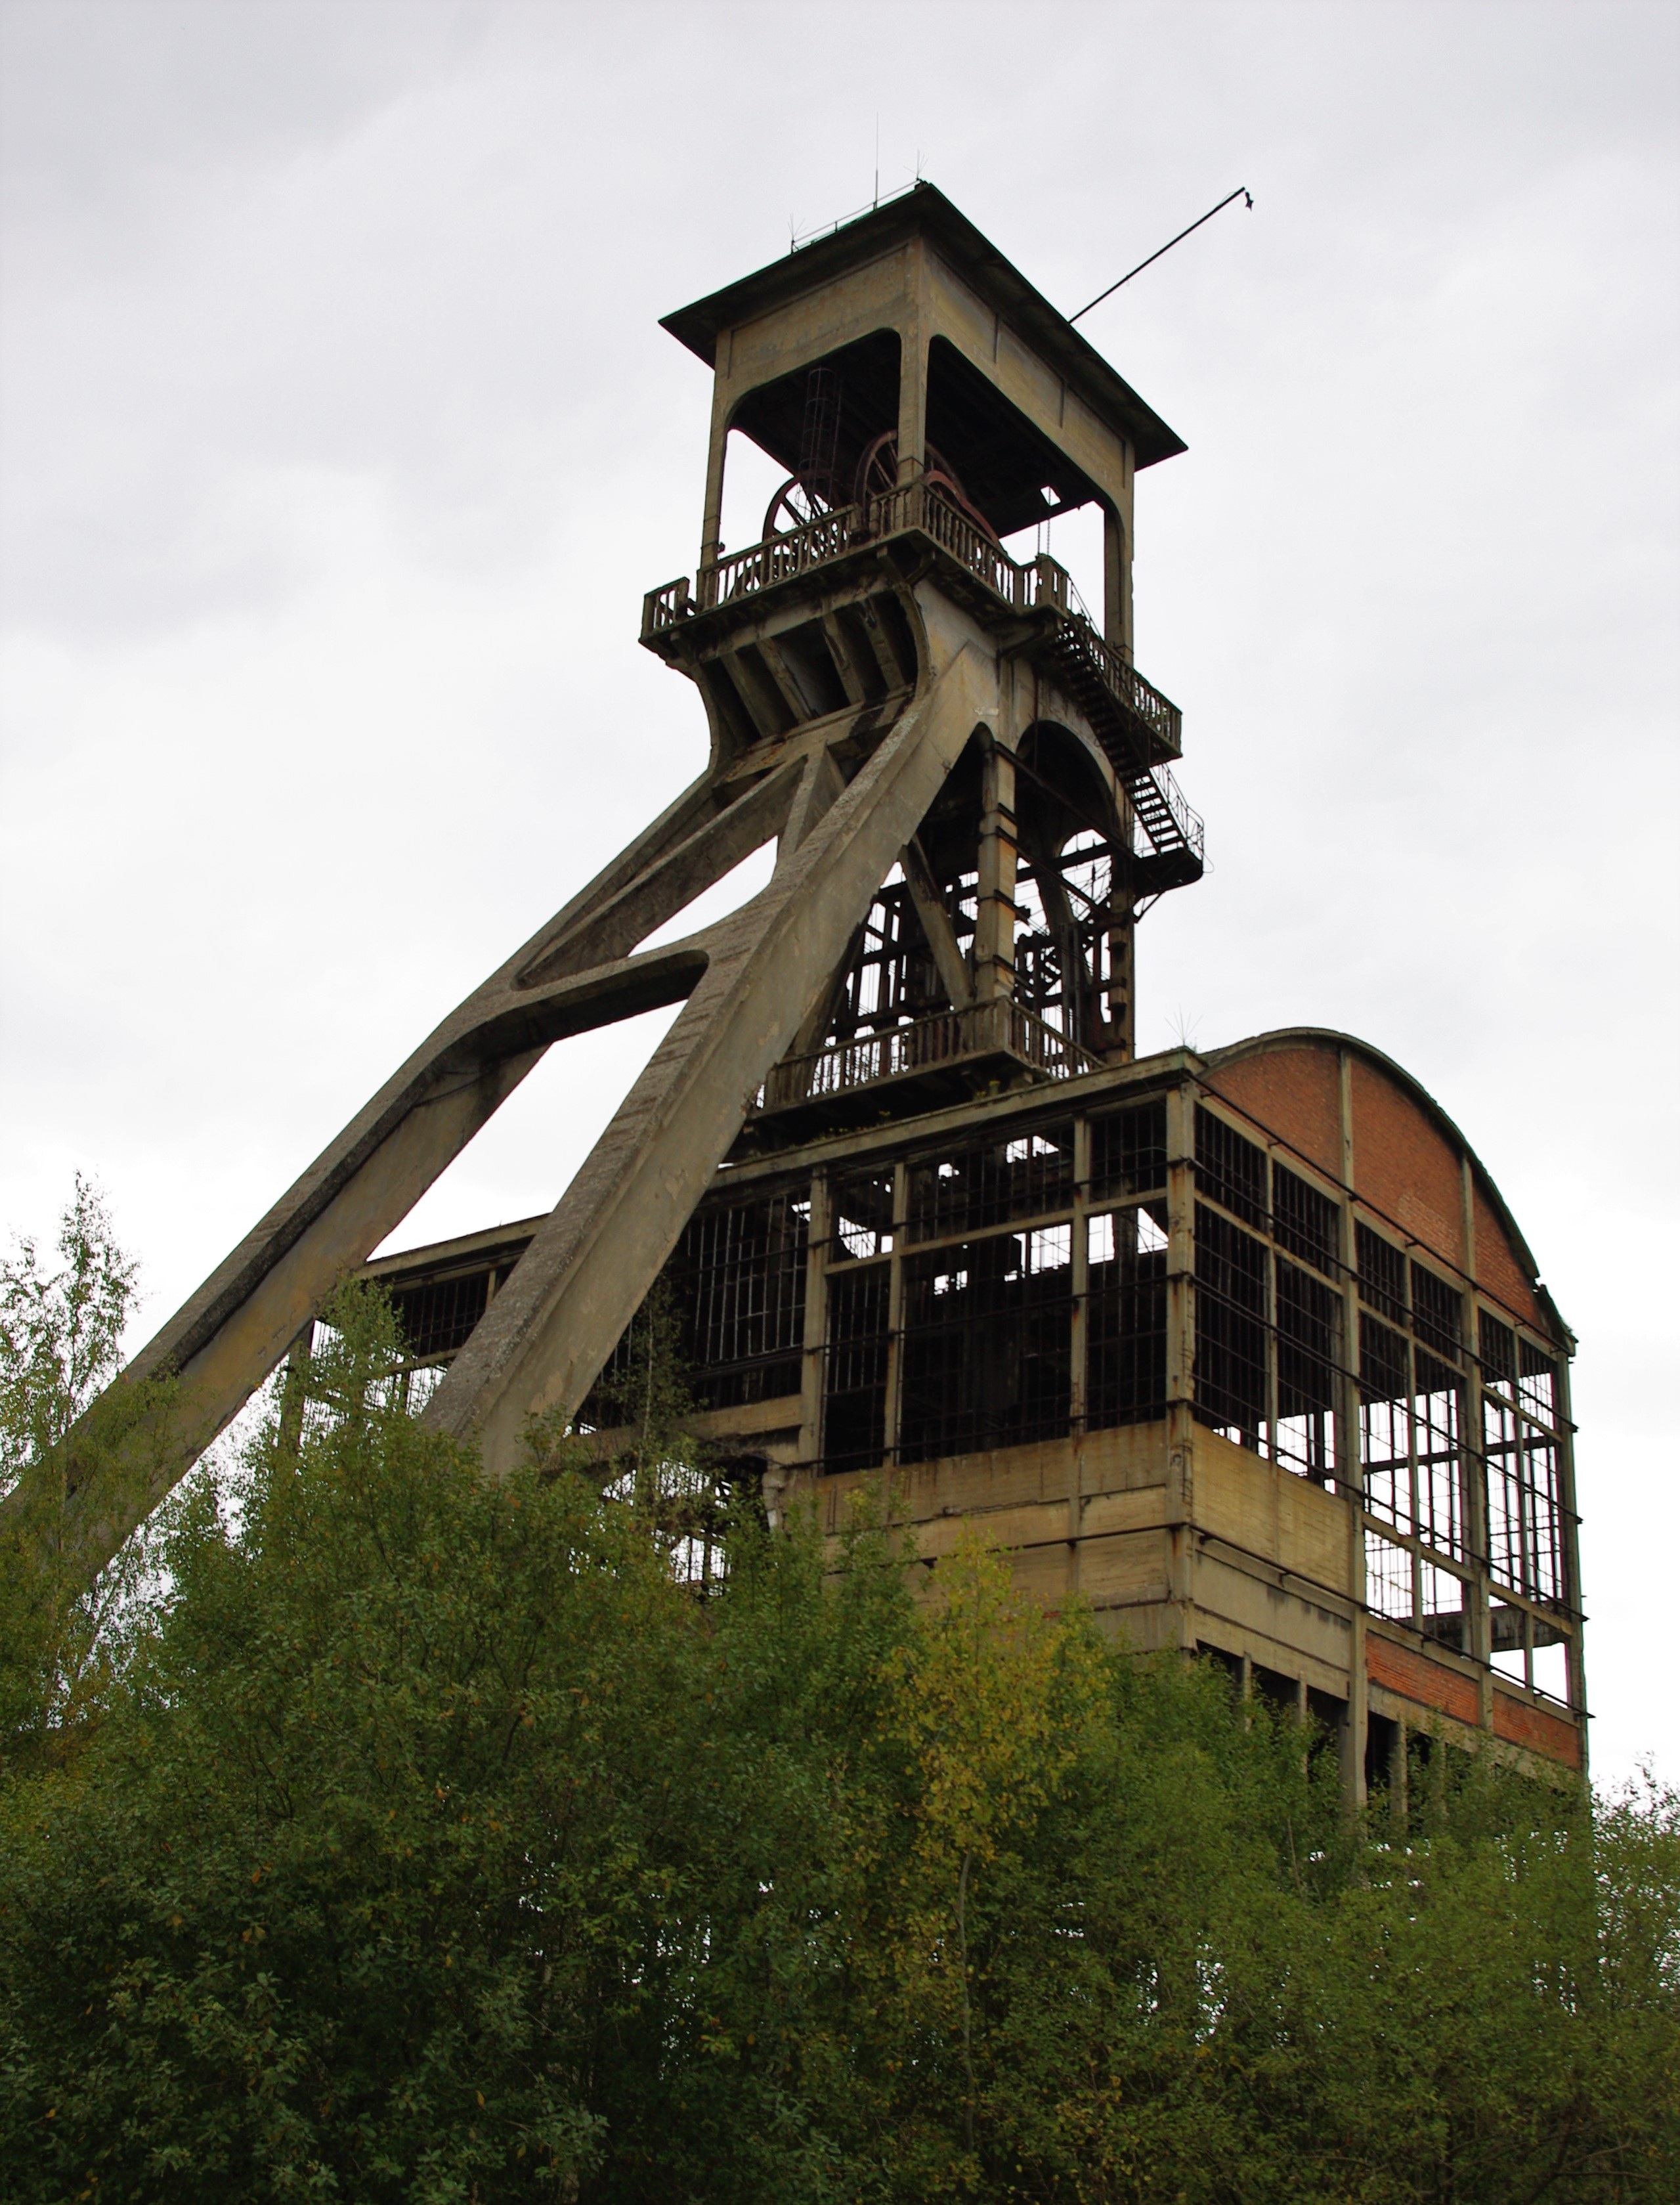 Mining industry photo